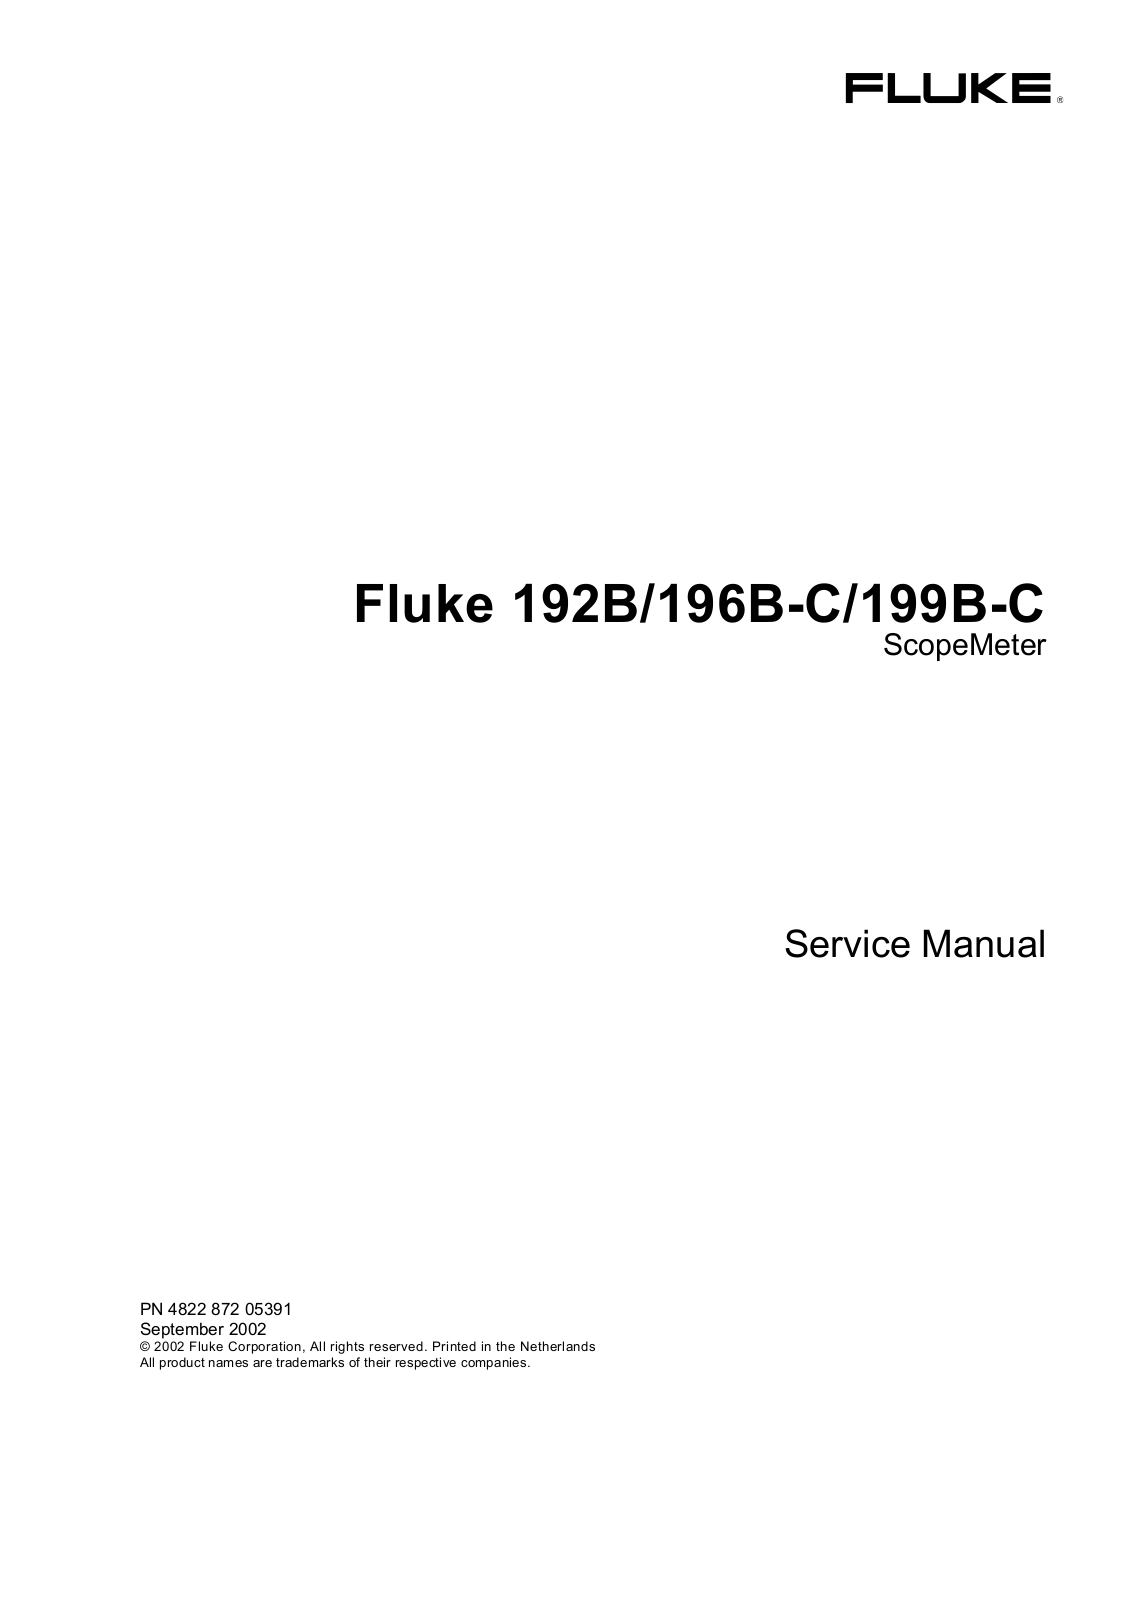 Fluke 199C, 199B, 196C, 196B, 192B Service Manual